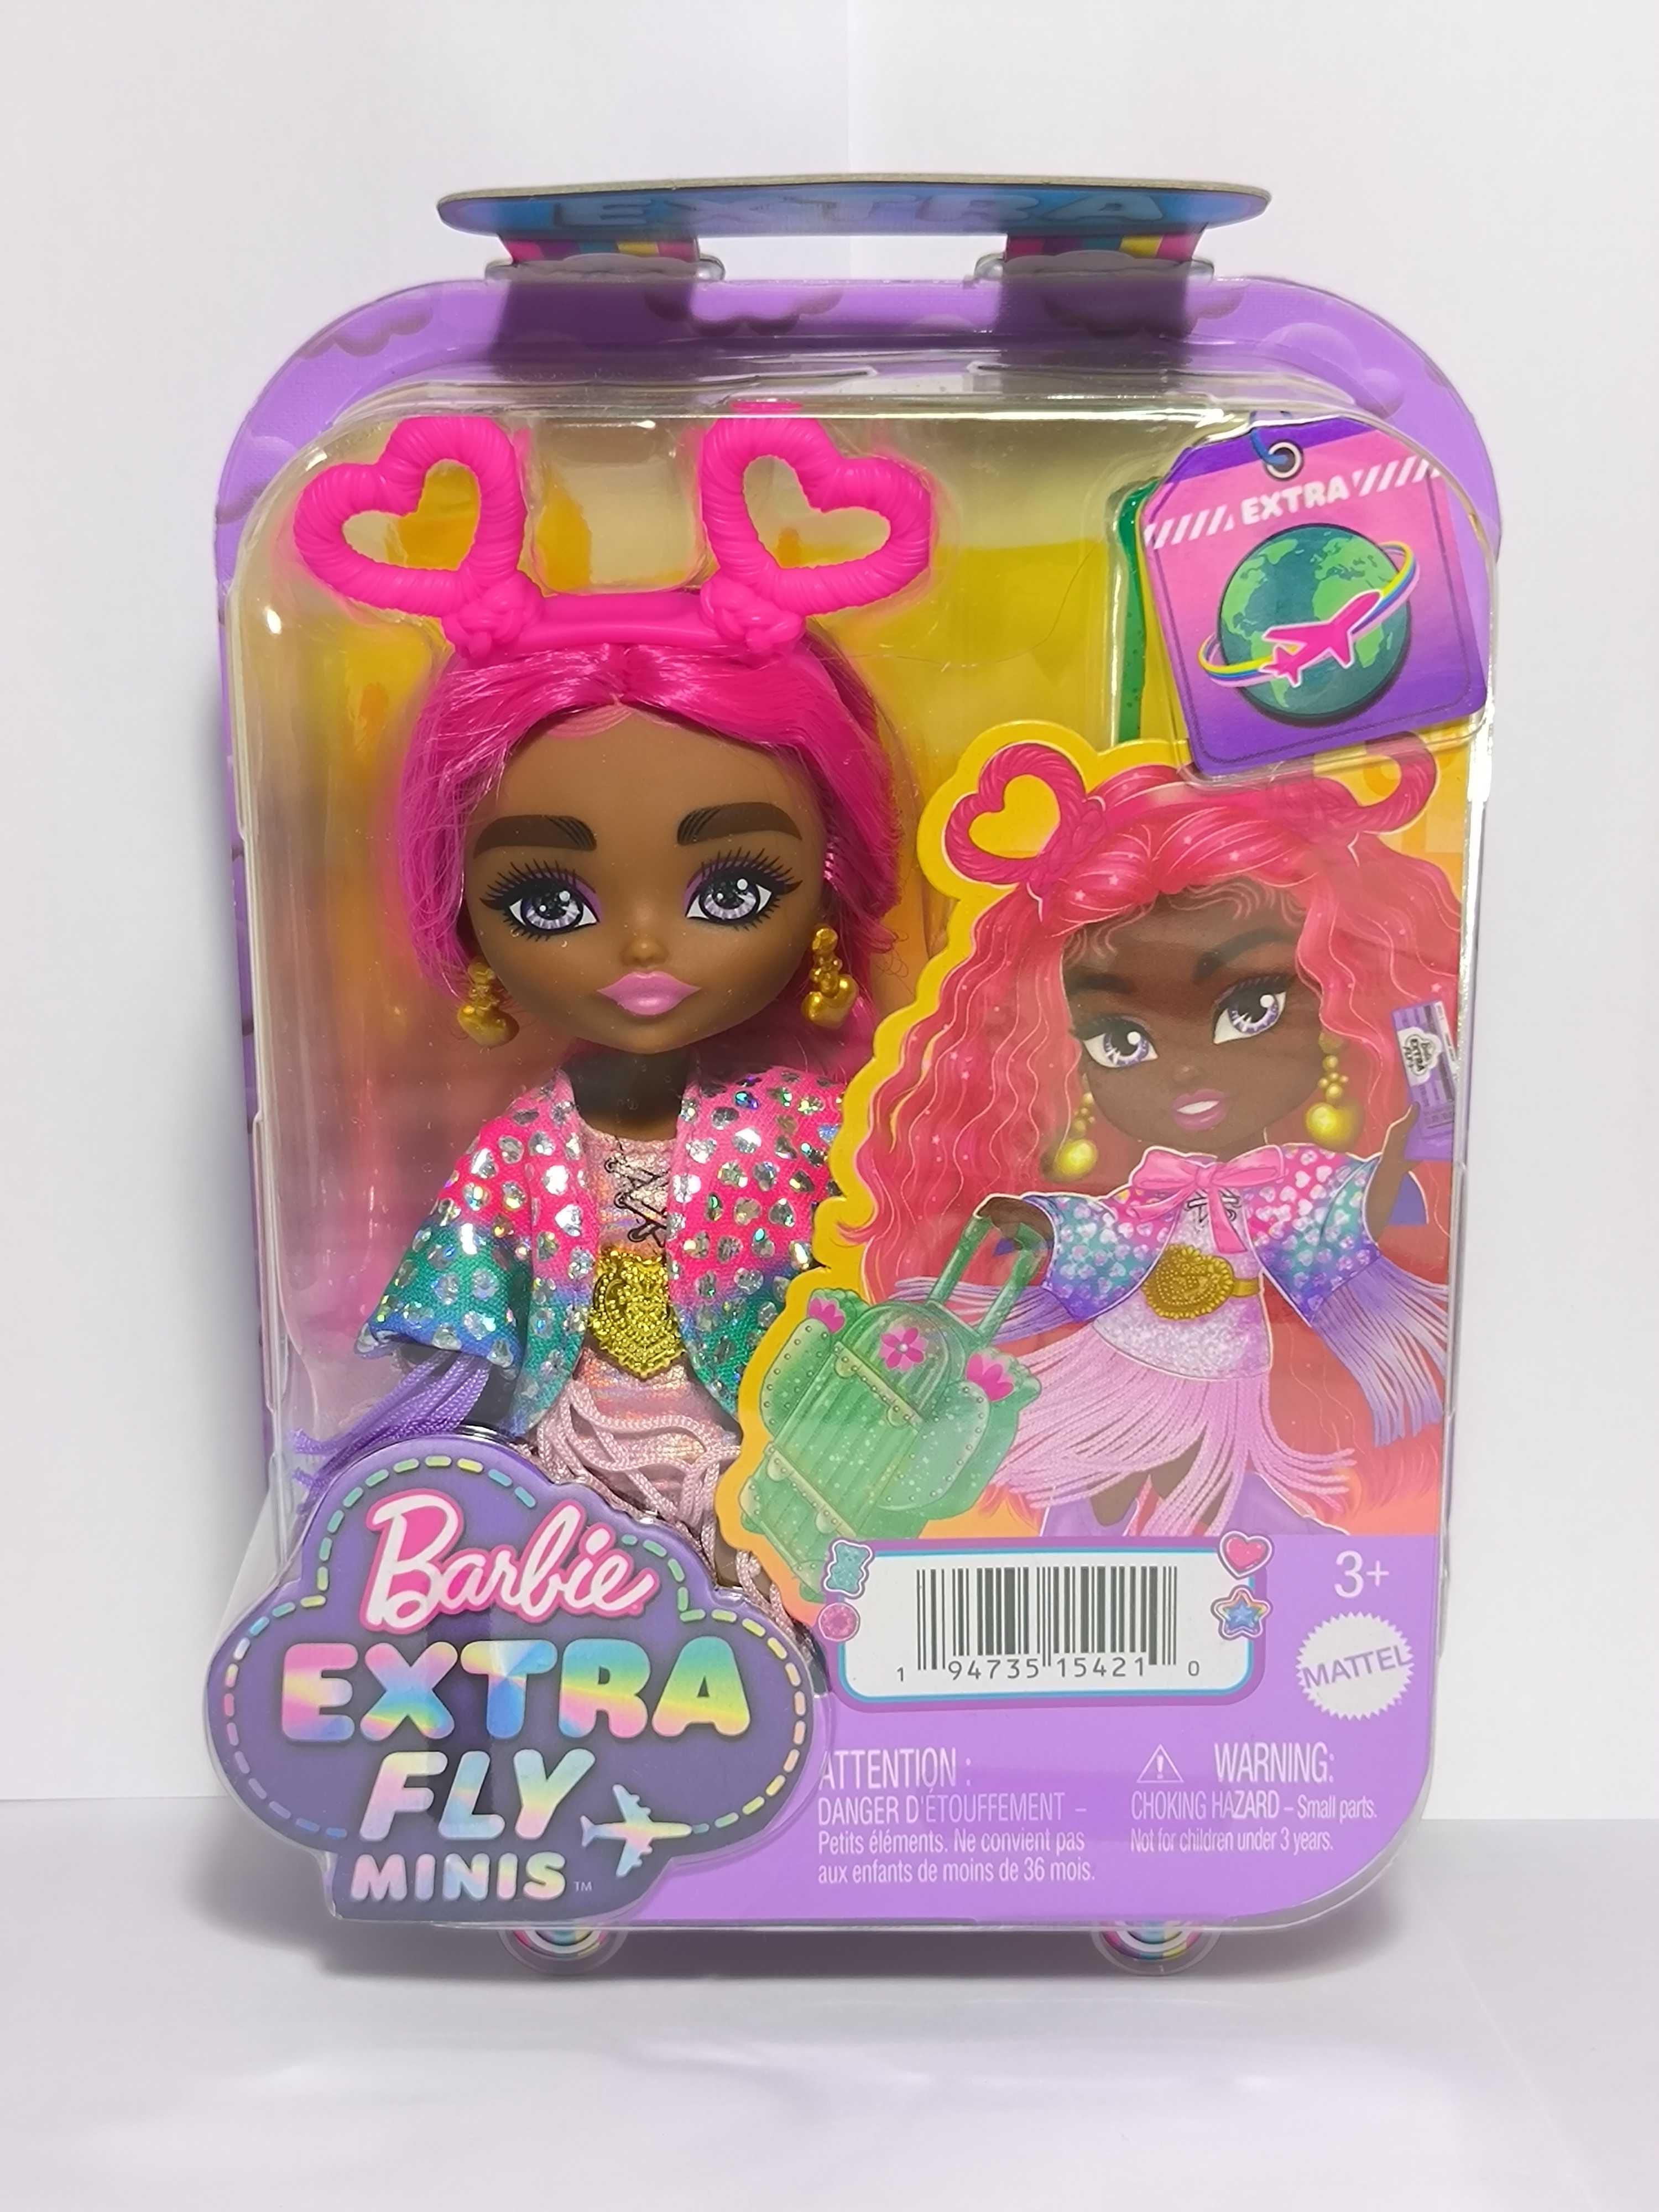 Barbie Extra Fly Minis Travel Кукла Барби Экстра мини путешественница